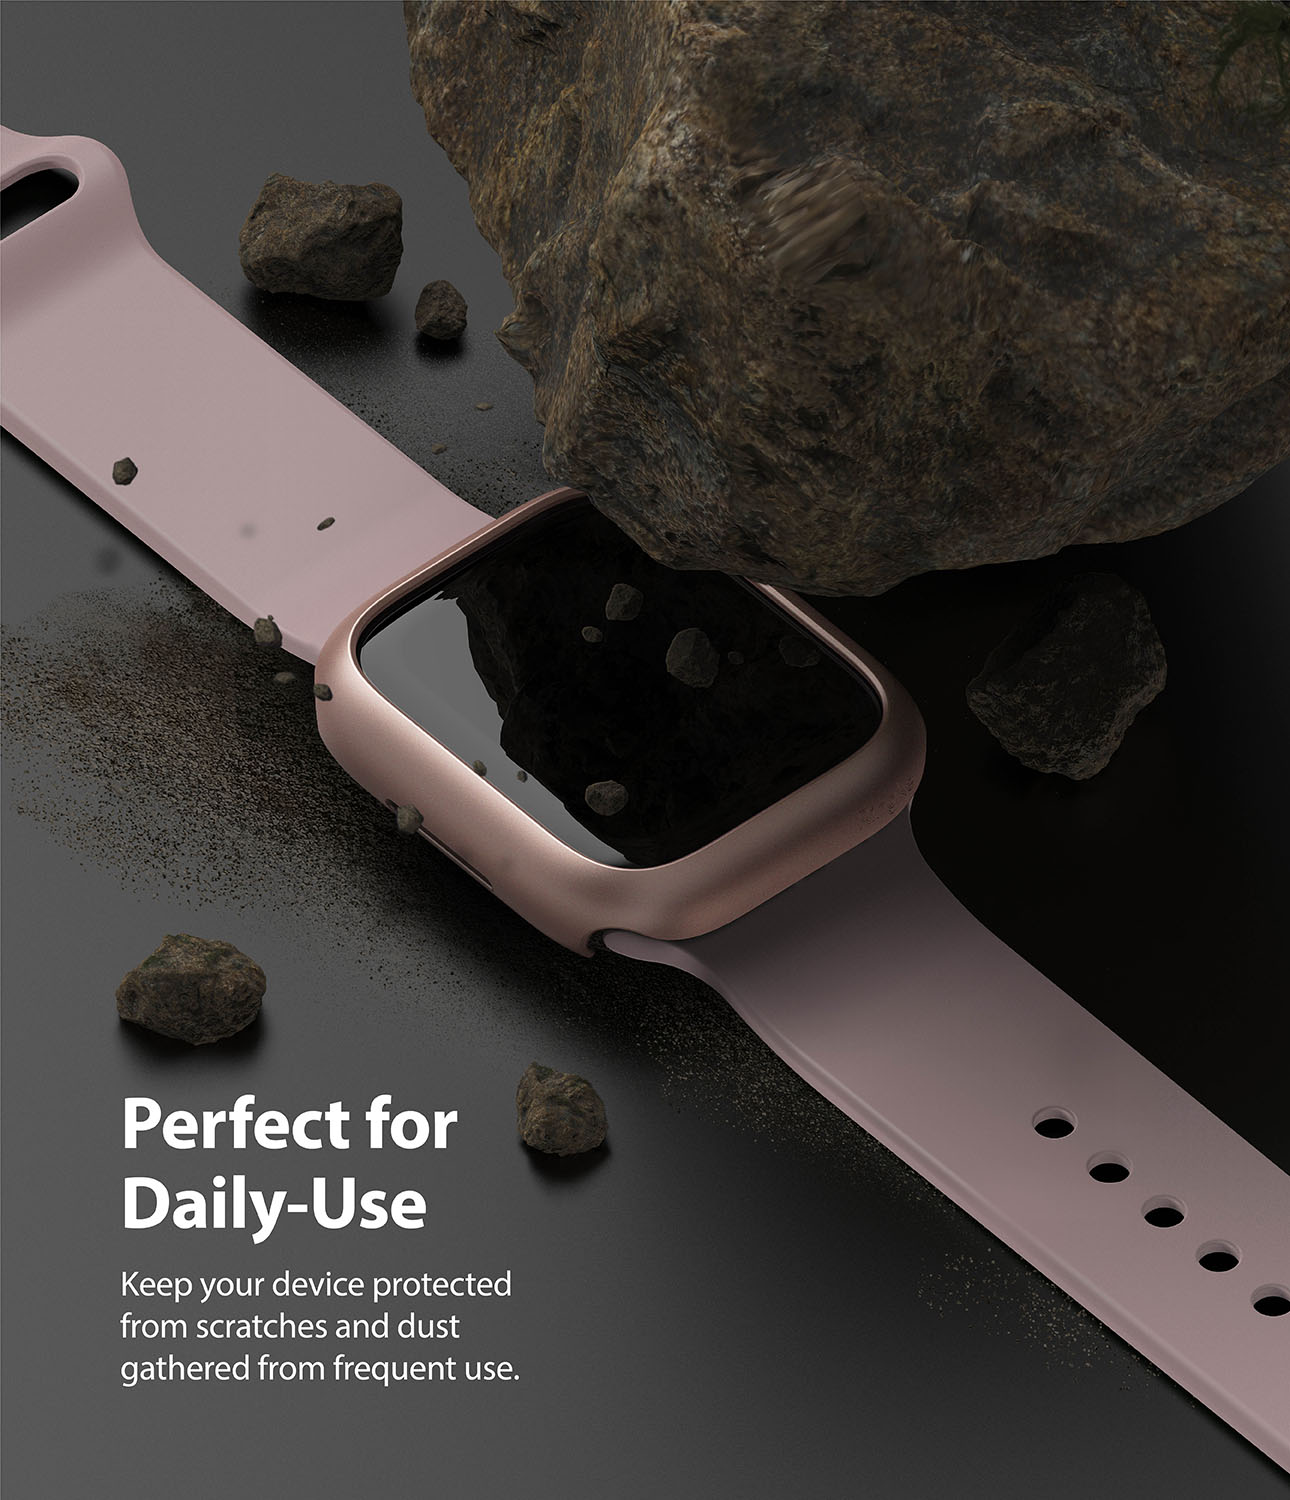 Coque Slim (2 pièces) Apple Watch 41mm Series 8, Pink & Clear